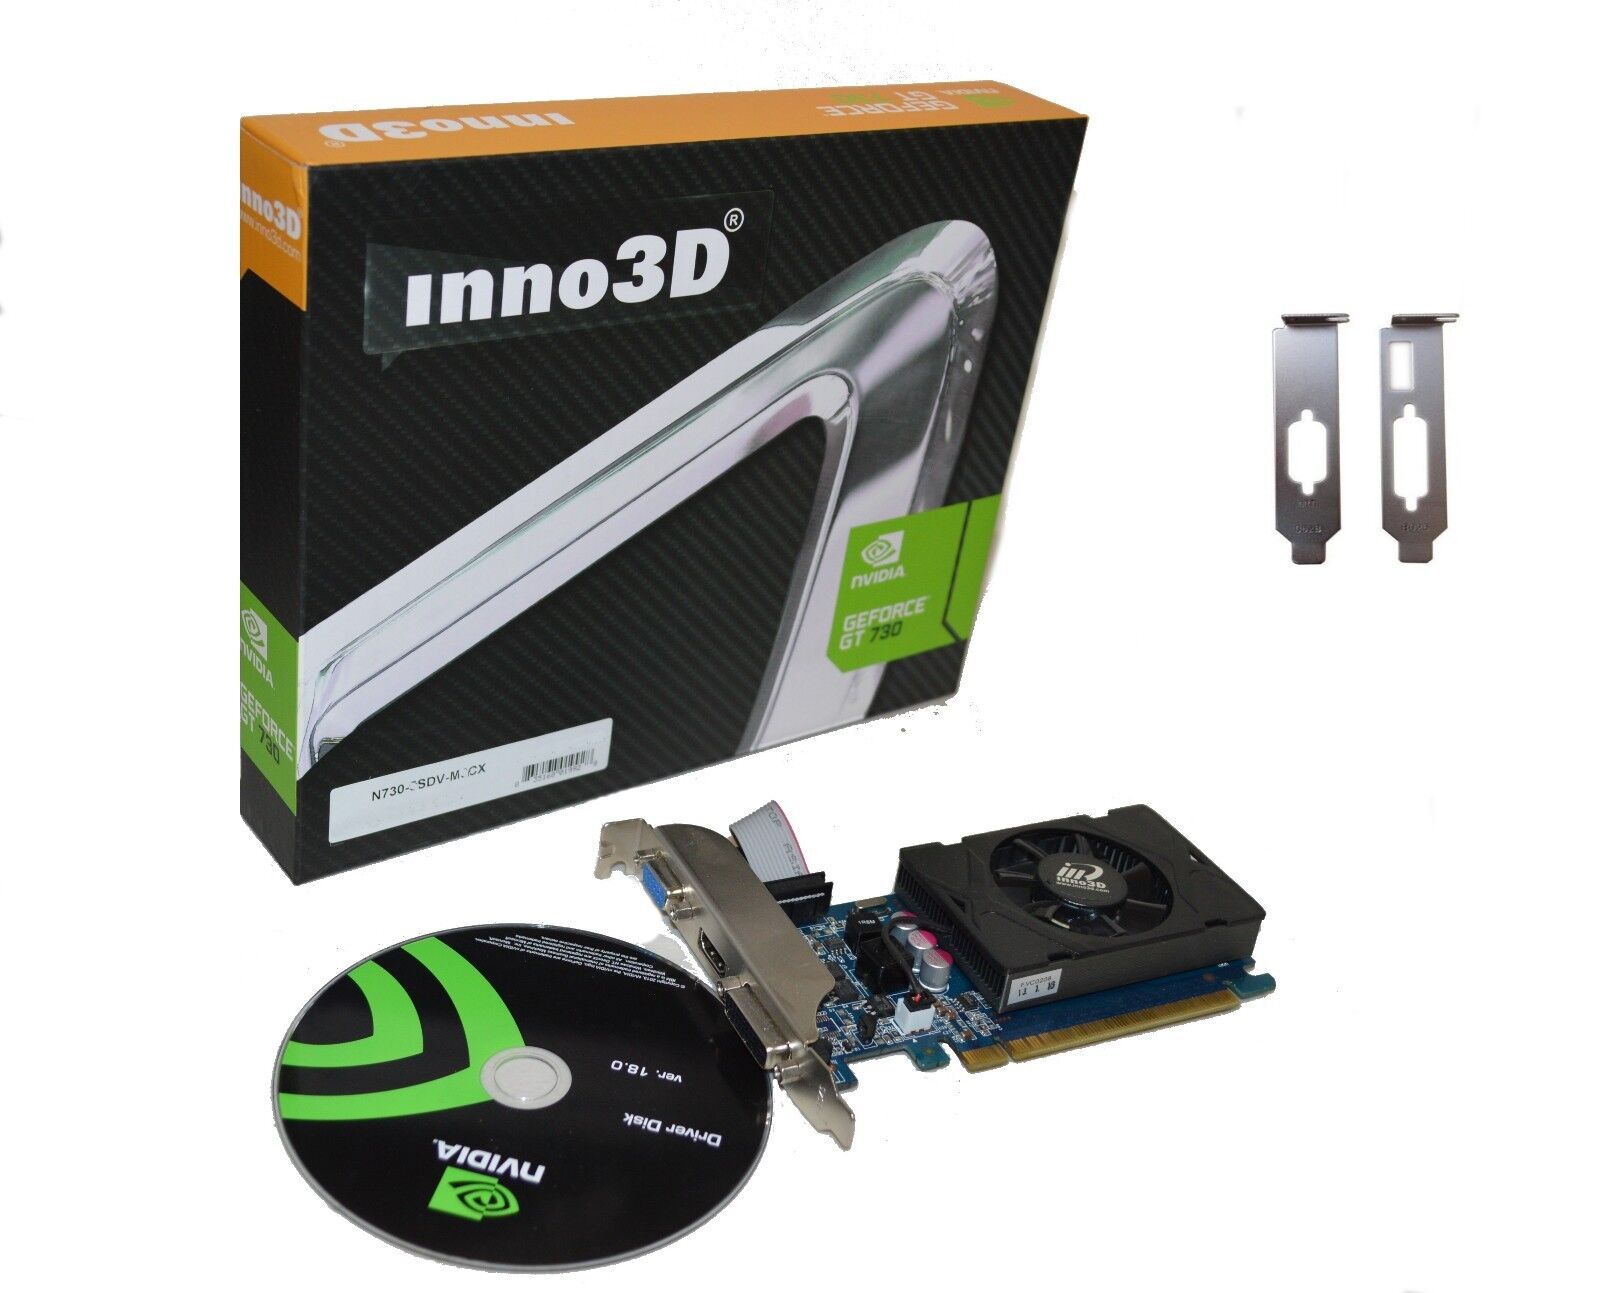 Inno3D Geforce 7 2GB DDR3 PCI Express x16 Video Graphics Card windows 8/7/10 Low